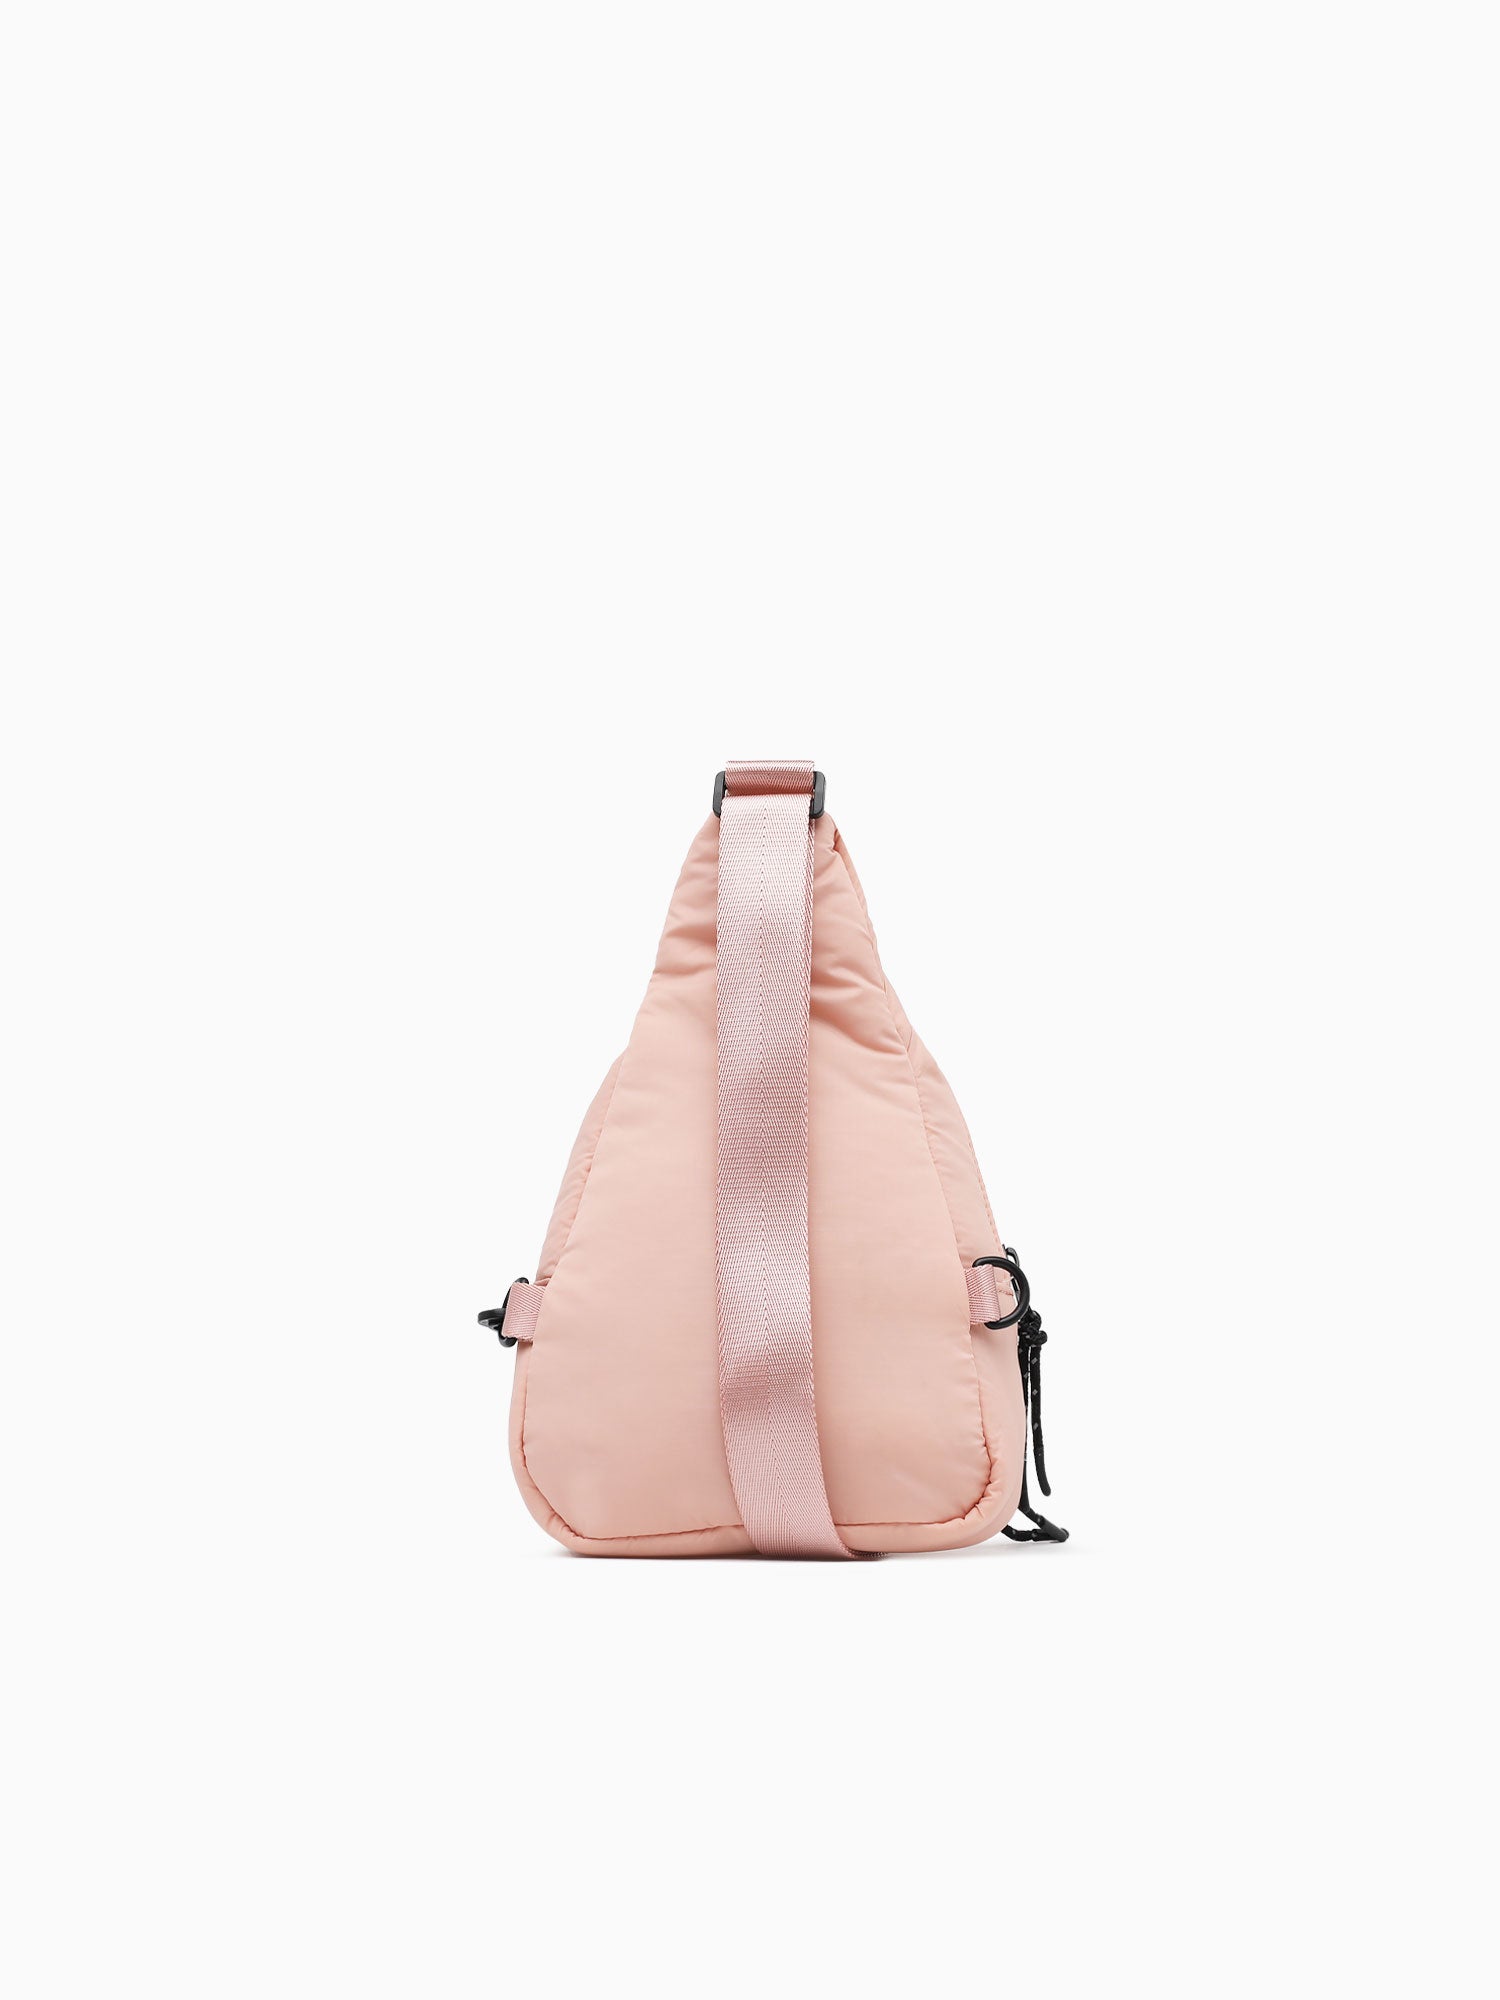 Body Backpack Blush Light Pink